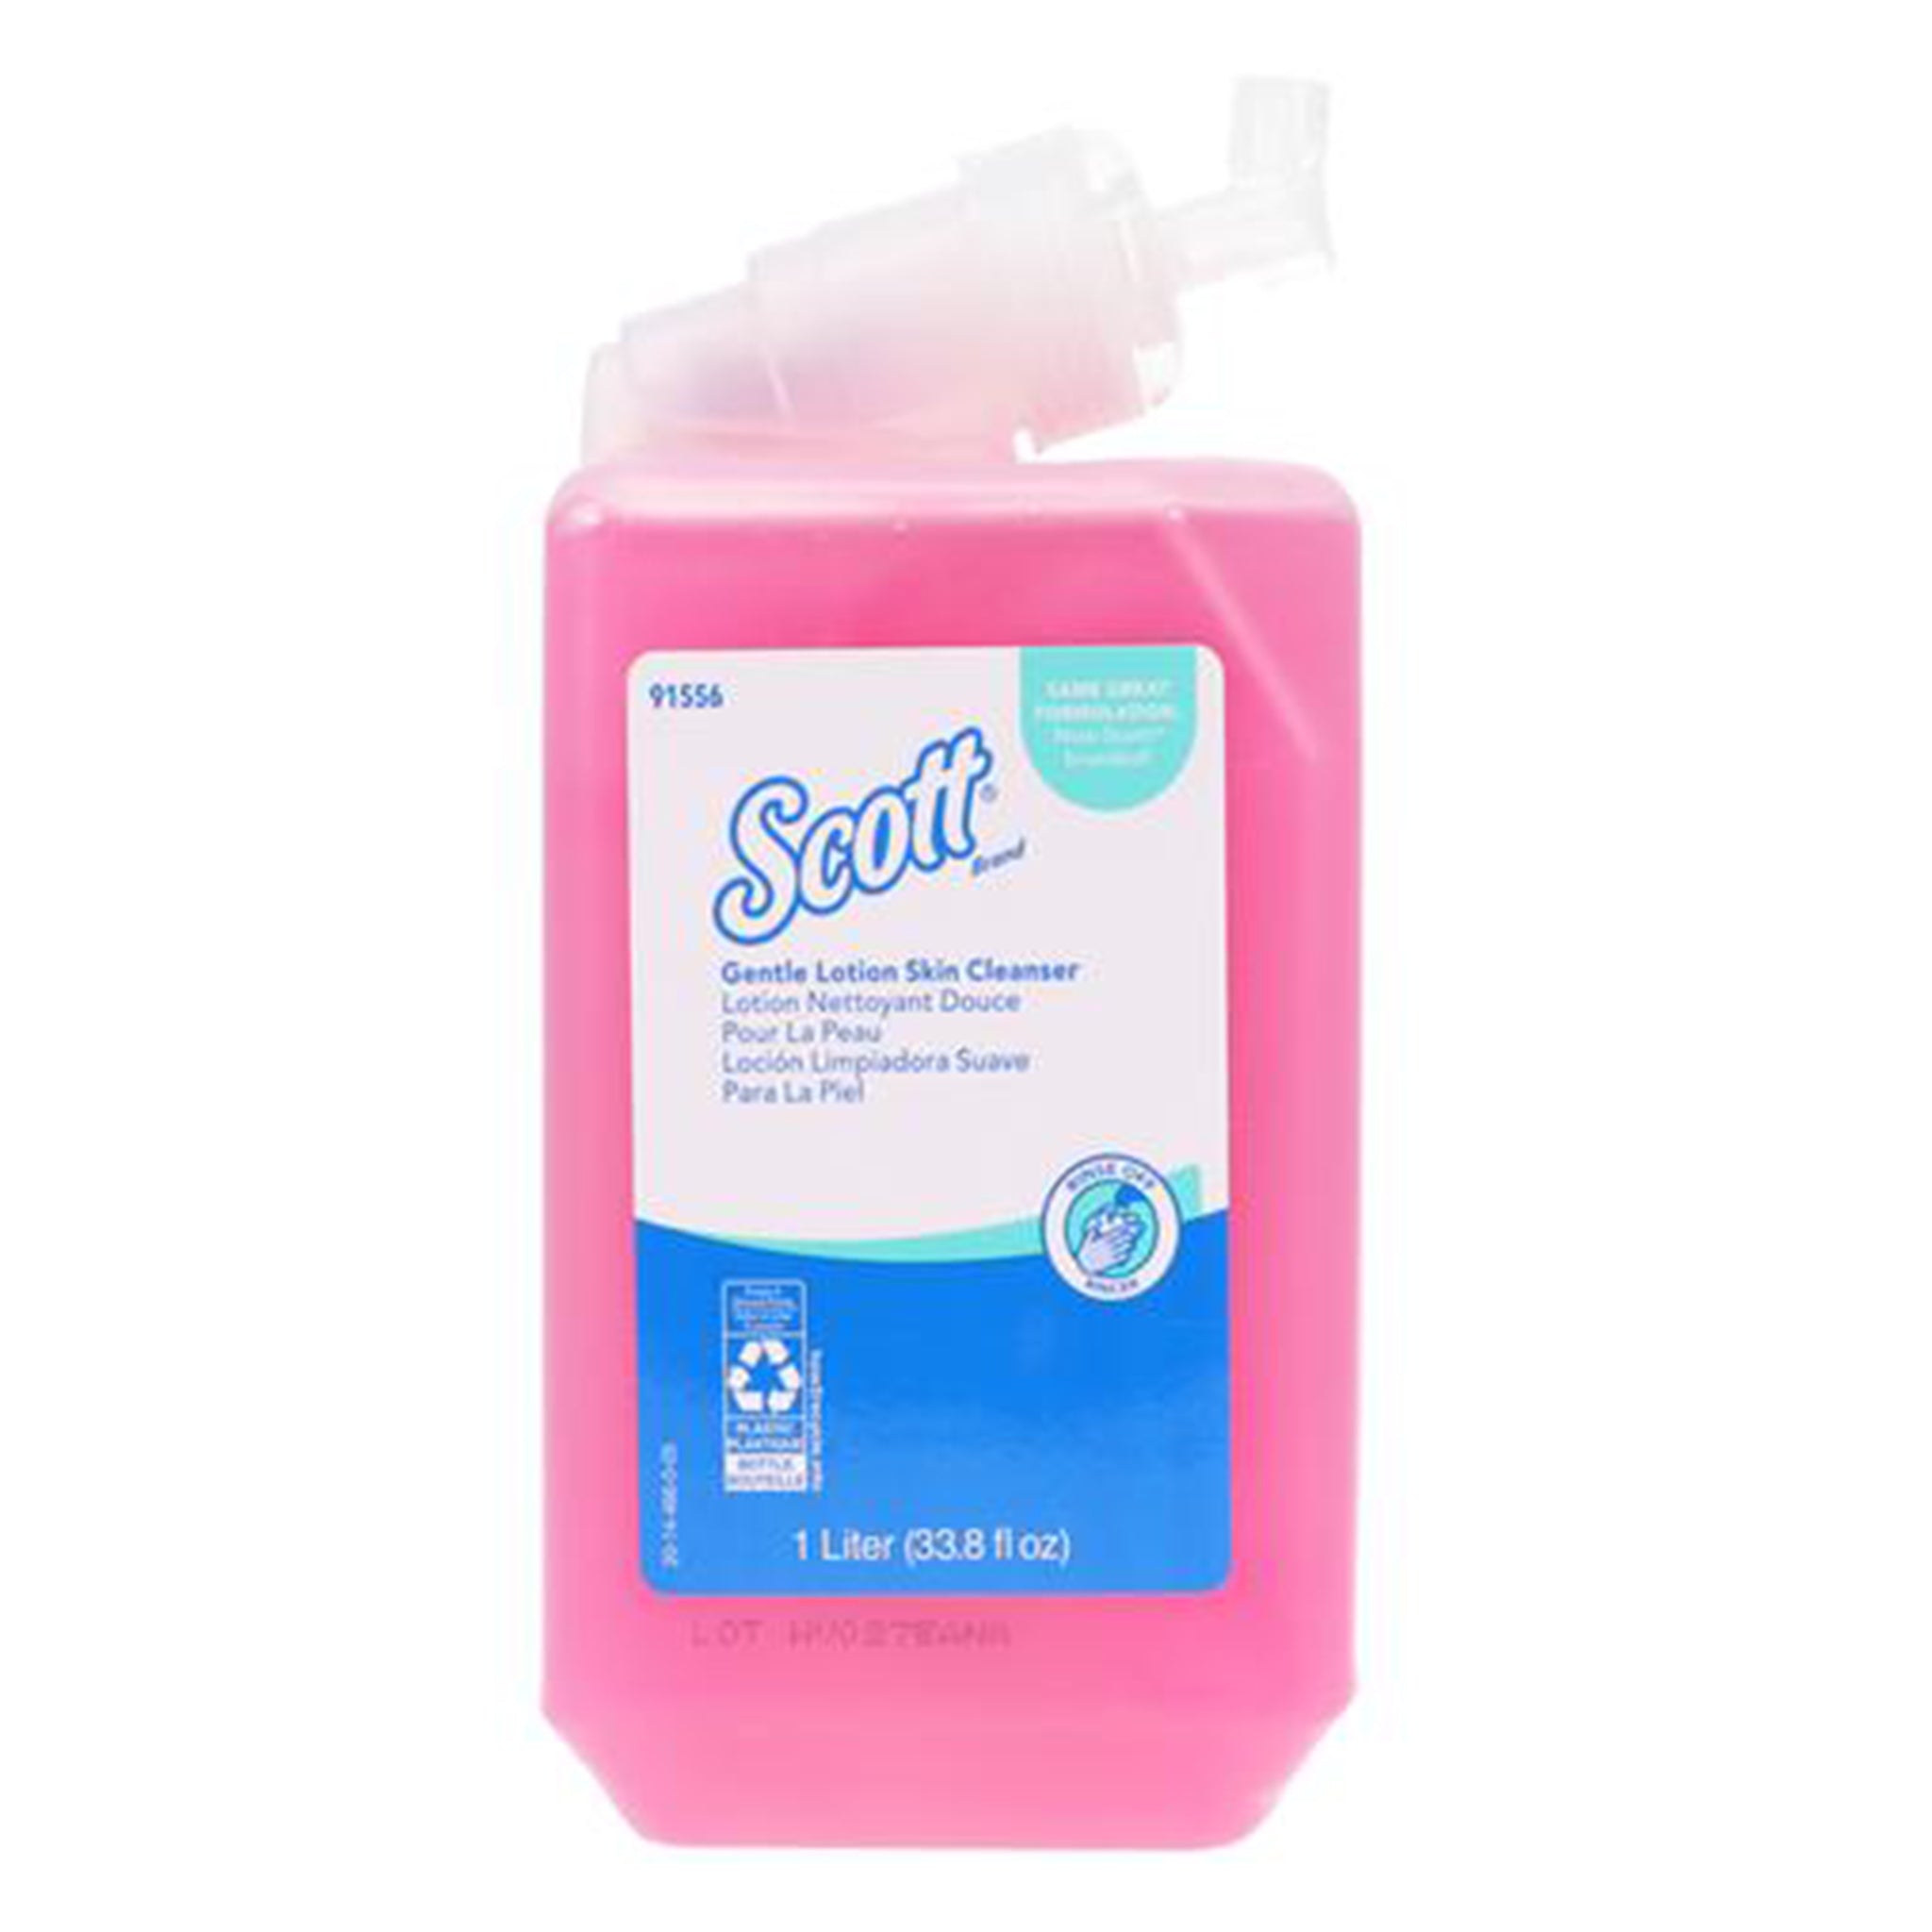 SOAP - KC Lotion Skin Cleanser 91556